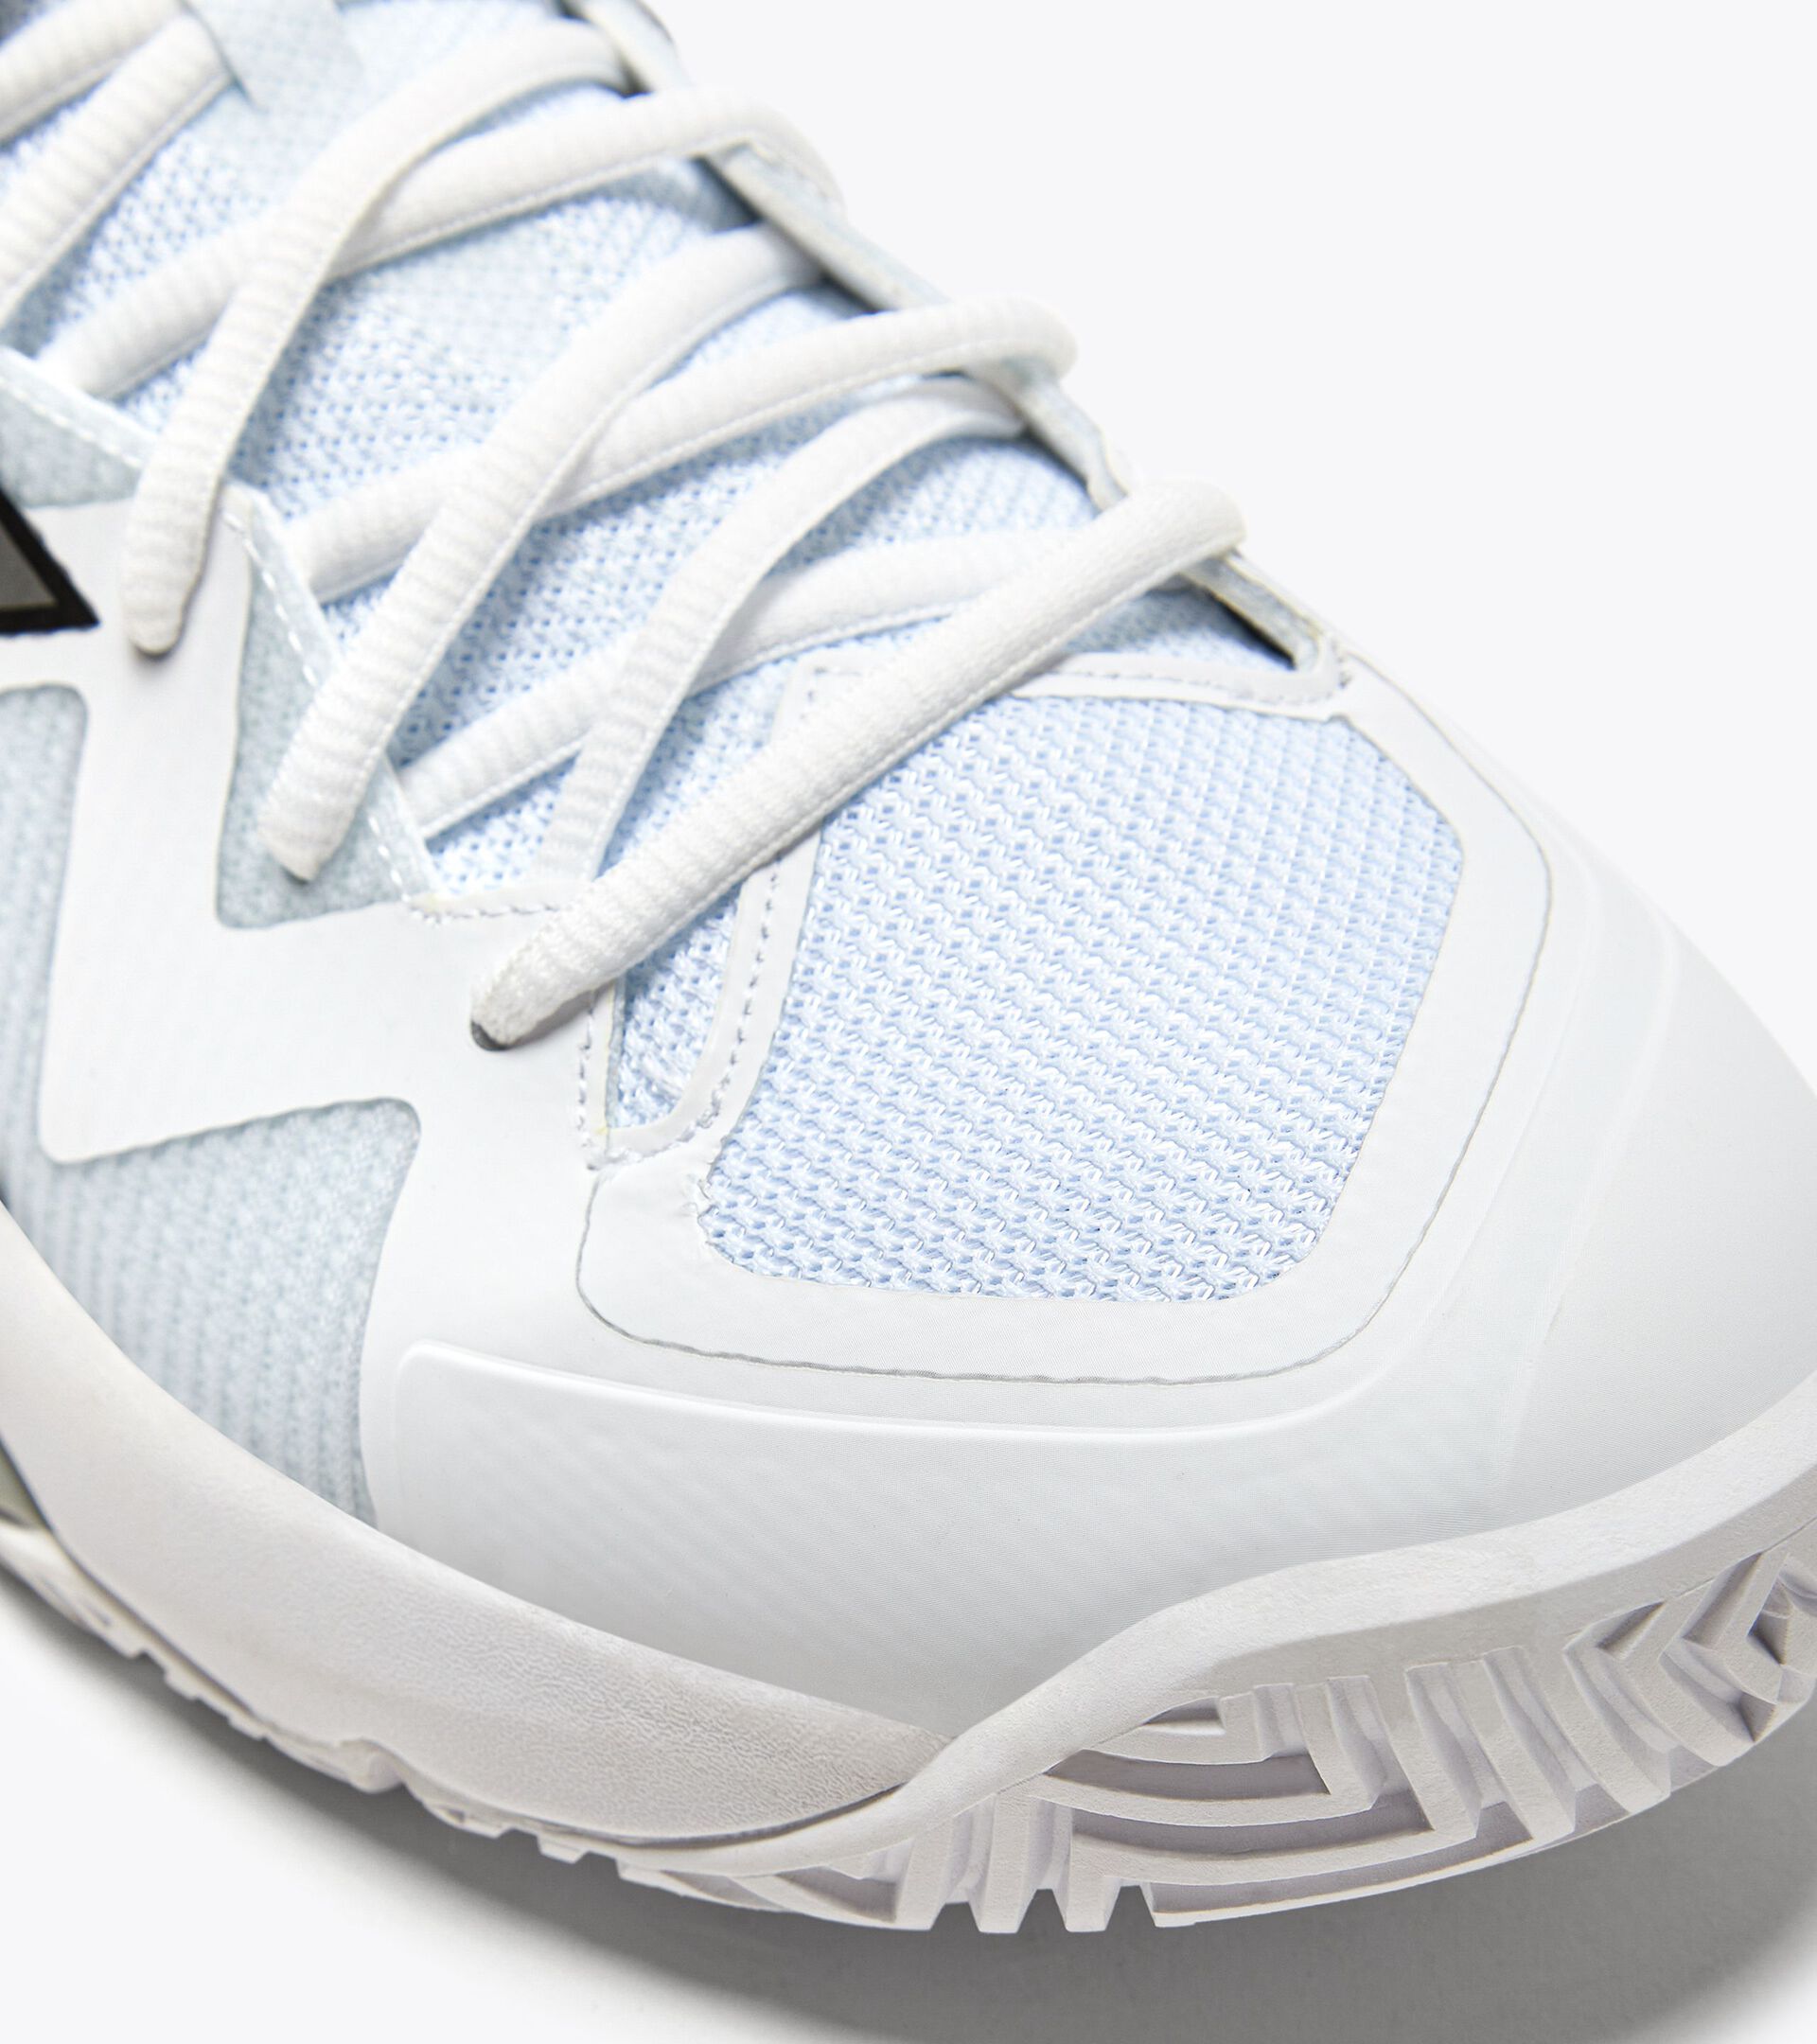 Tennis shoes for hard surfaces or clay - Men B.ICON 2 AG WHITE/SILVER - Diadora